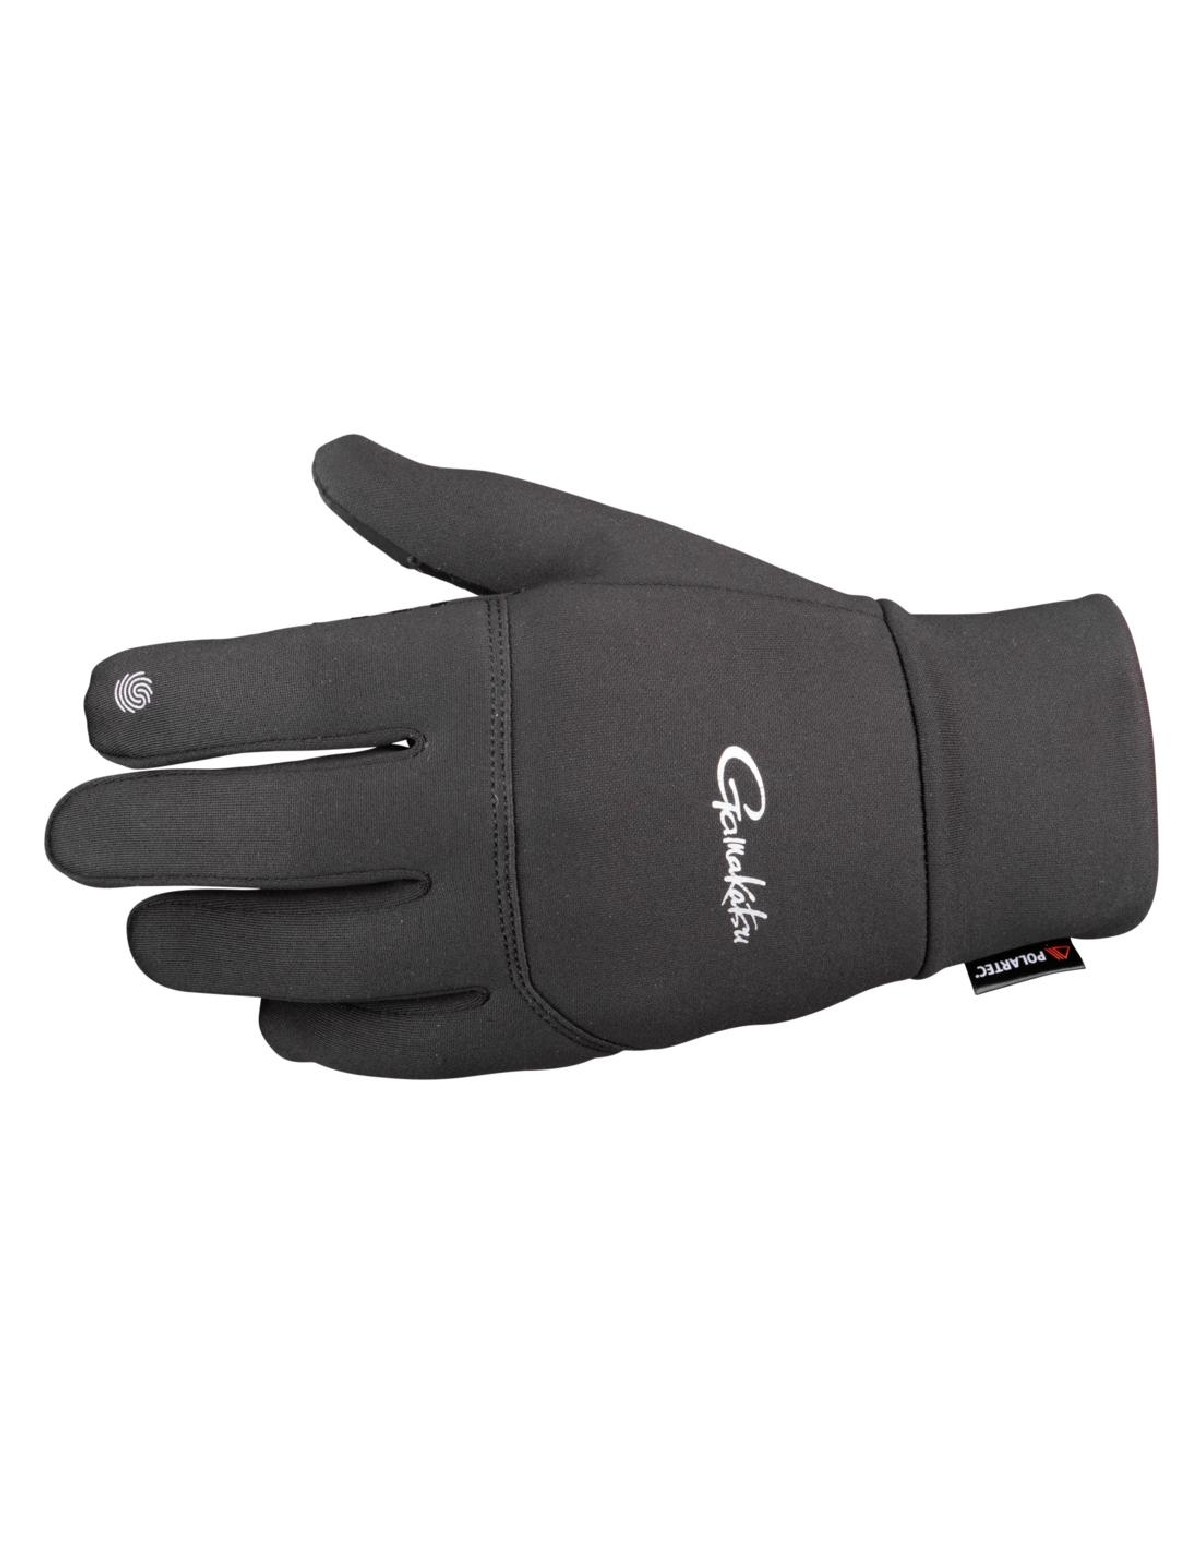 Gamakatsu G-Power Gloves X-Large